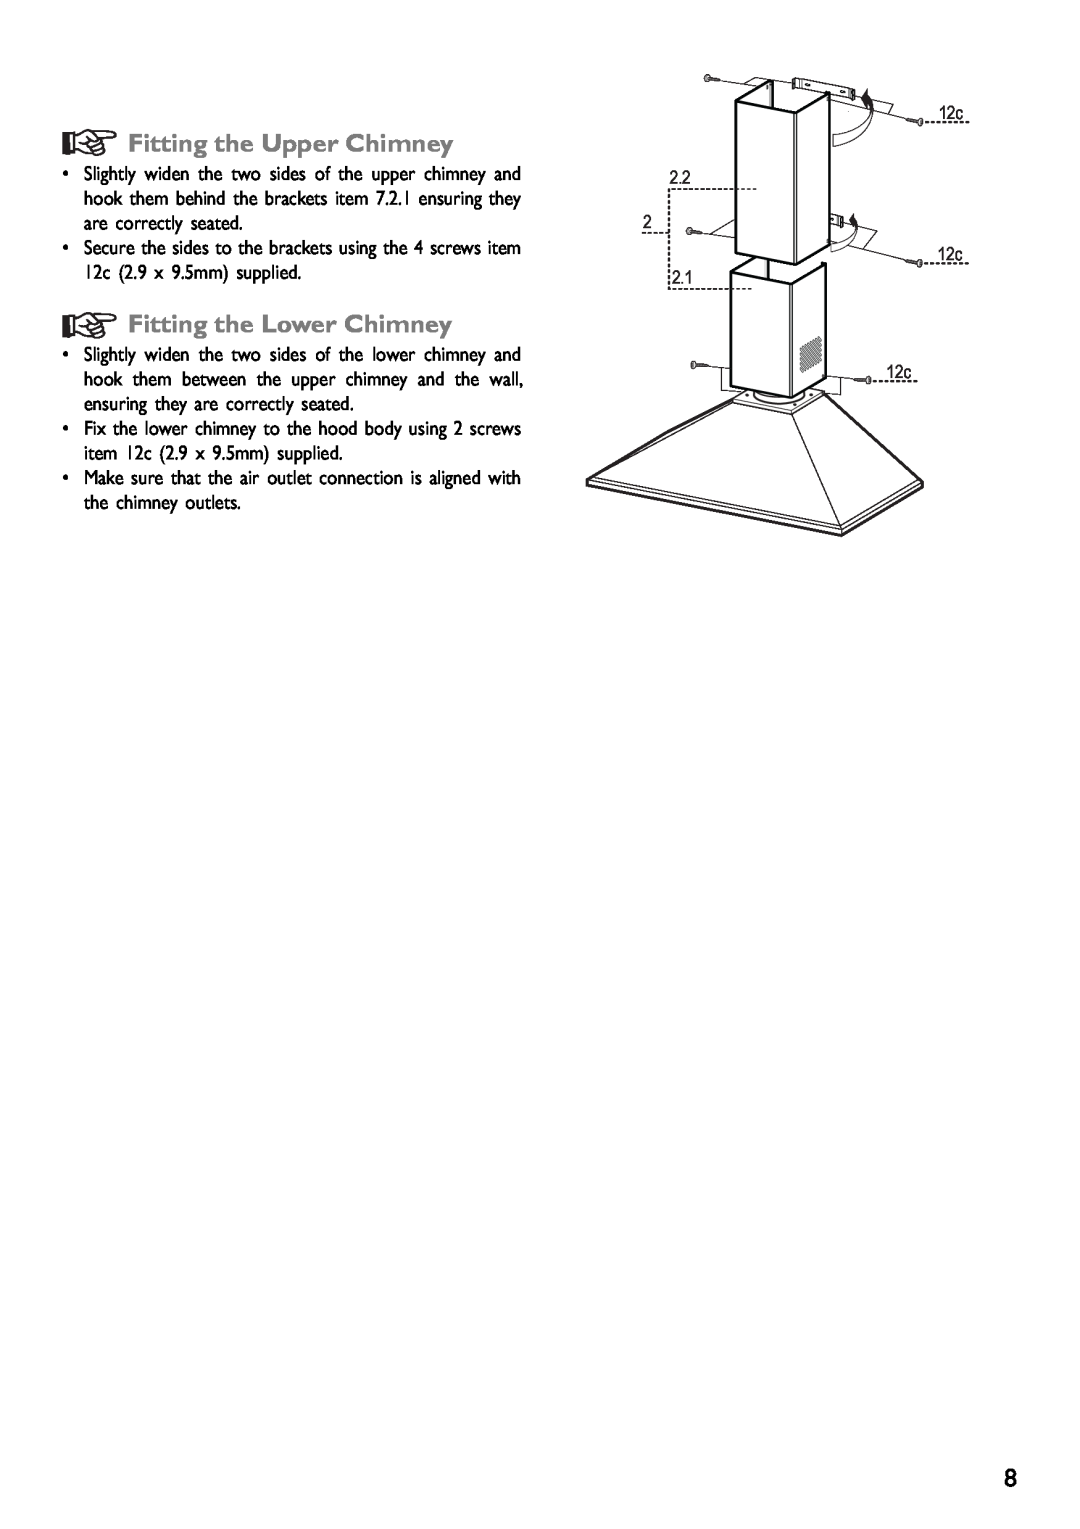 John Lewis JLBIHD902, JLBIHD601 instruction manual Fitting the Upper Chimney, Fitting the Lower Chimney, 2.2, 12c 12c 12c 